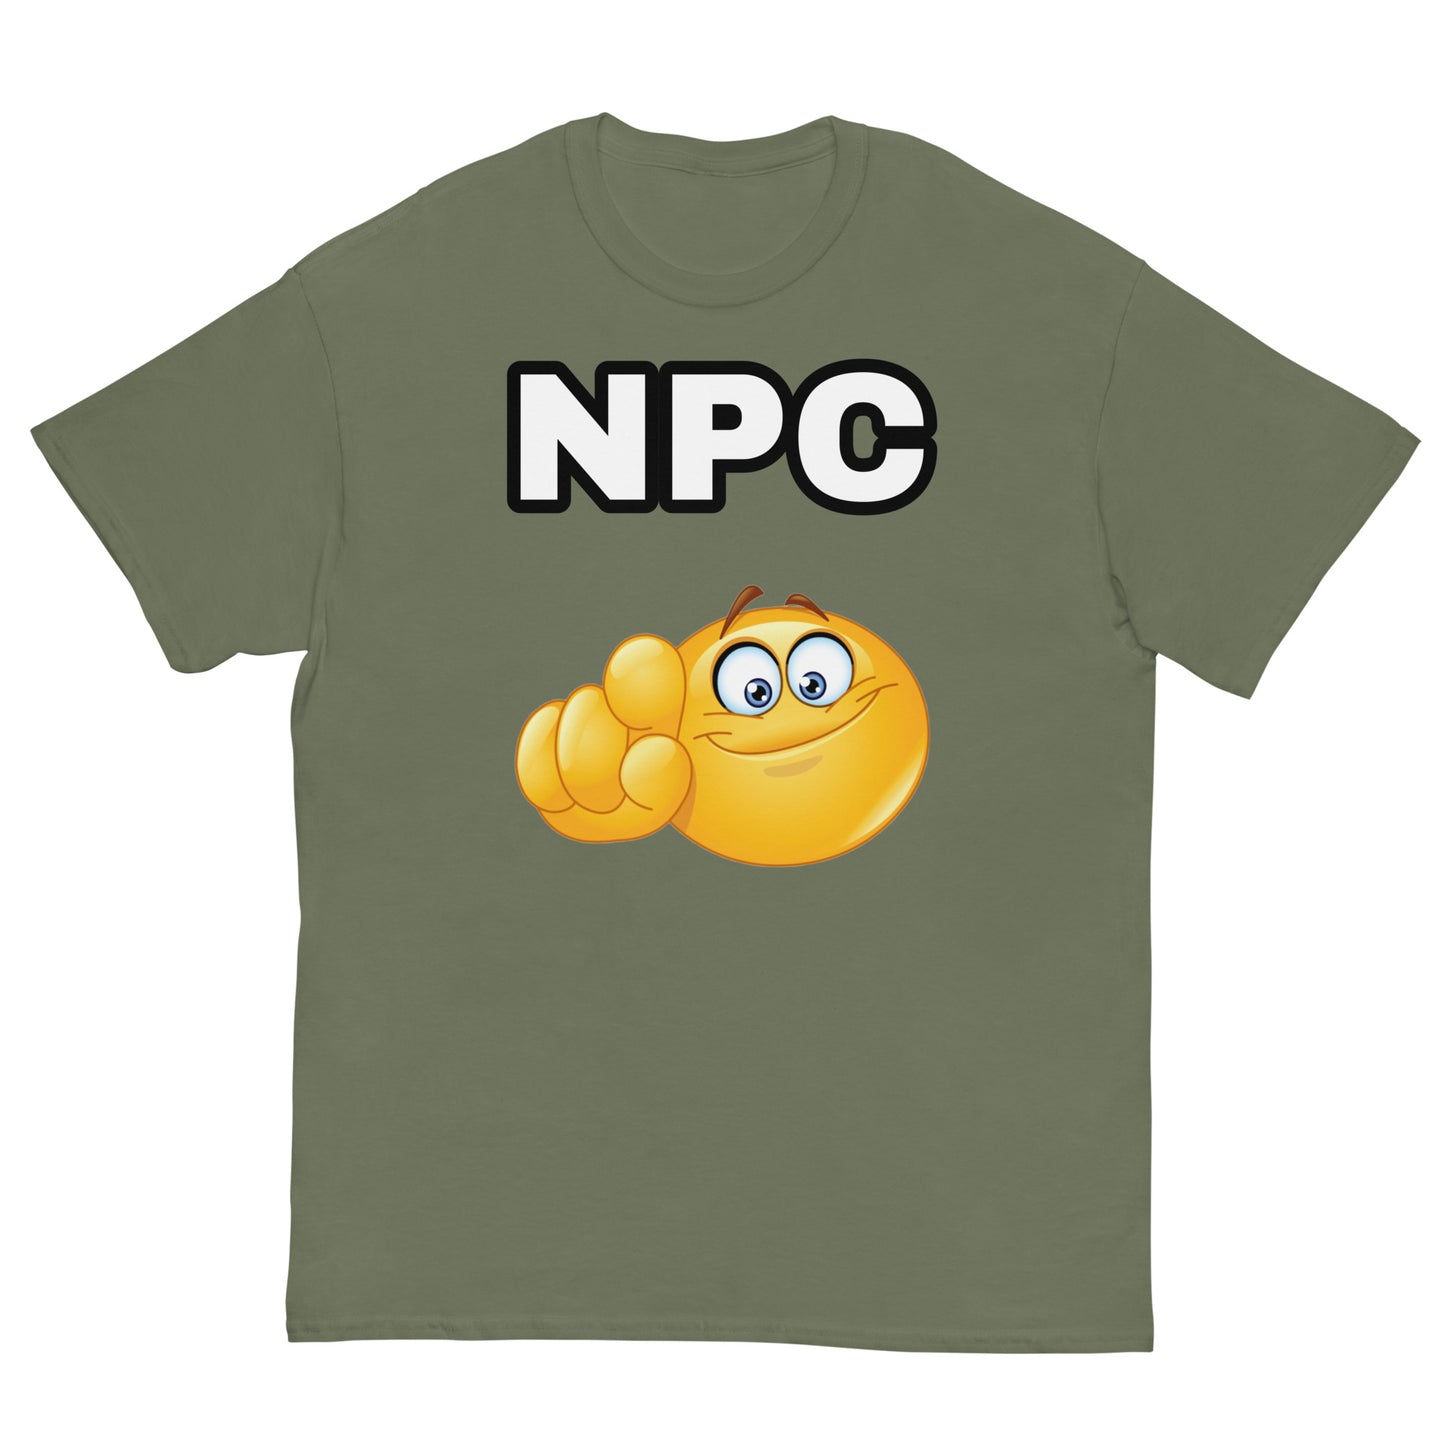 NPC Cringey Tee